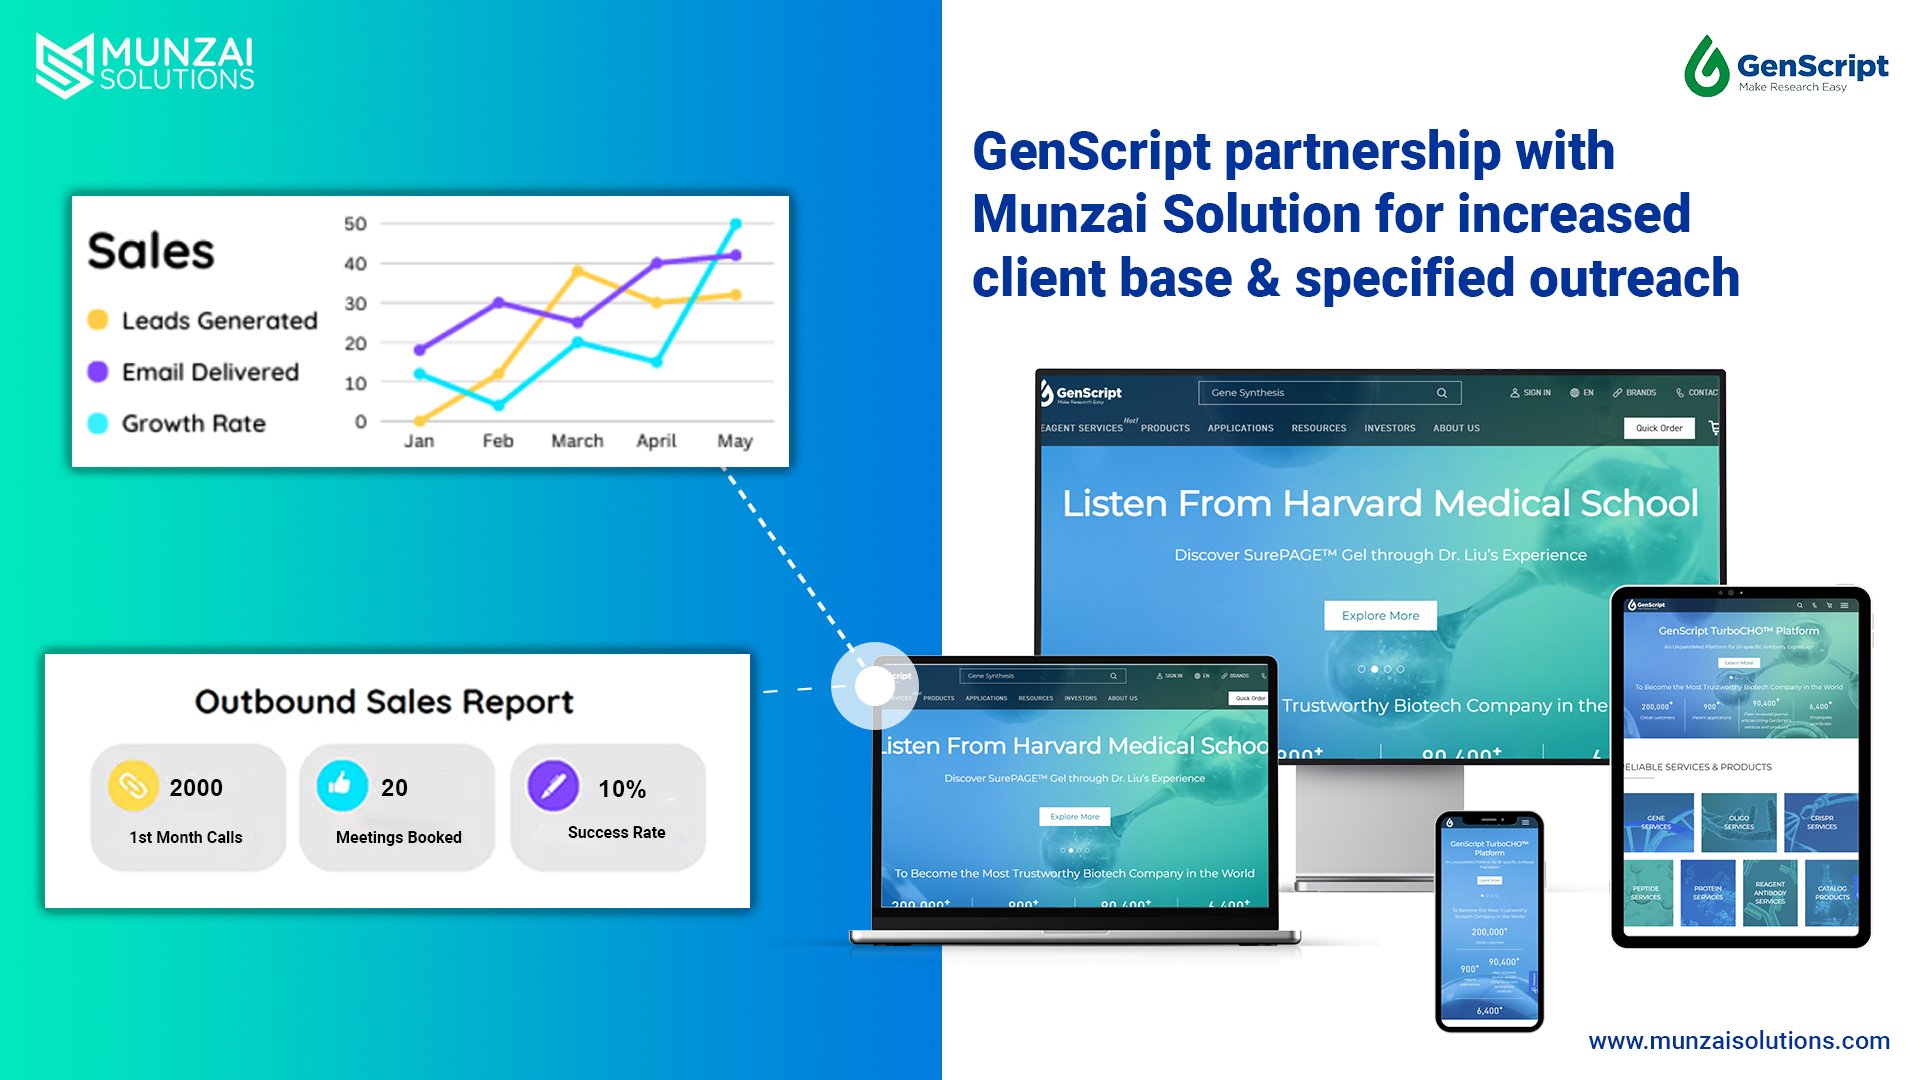 genscript and munzai solutions partnership